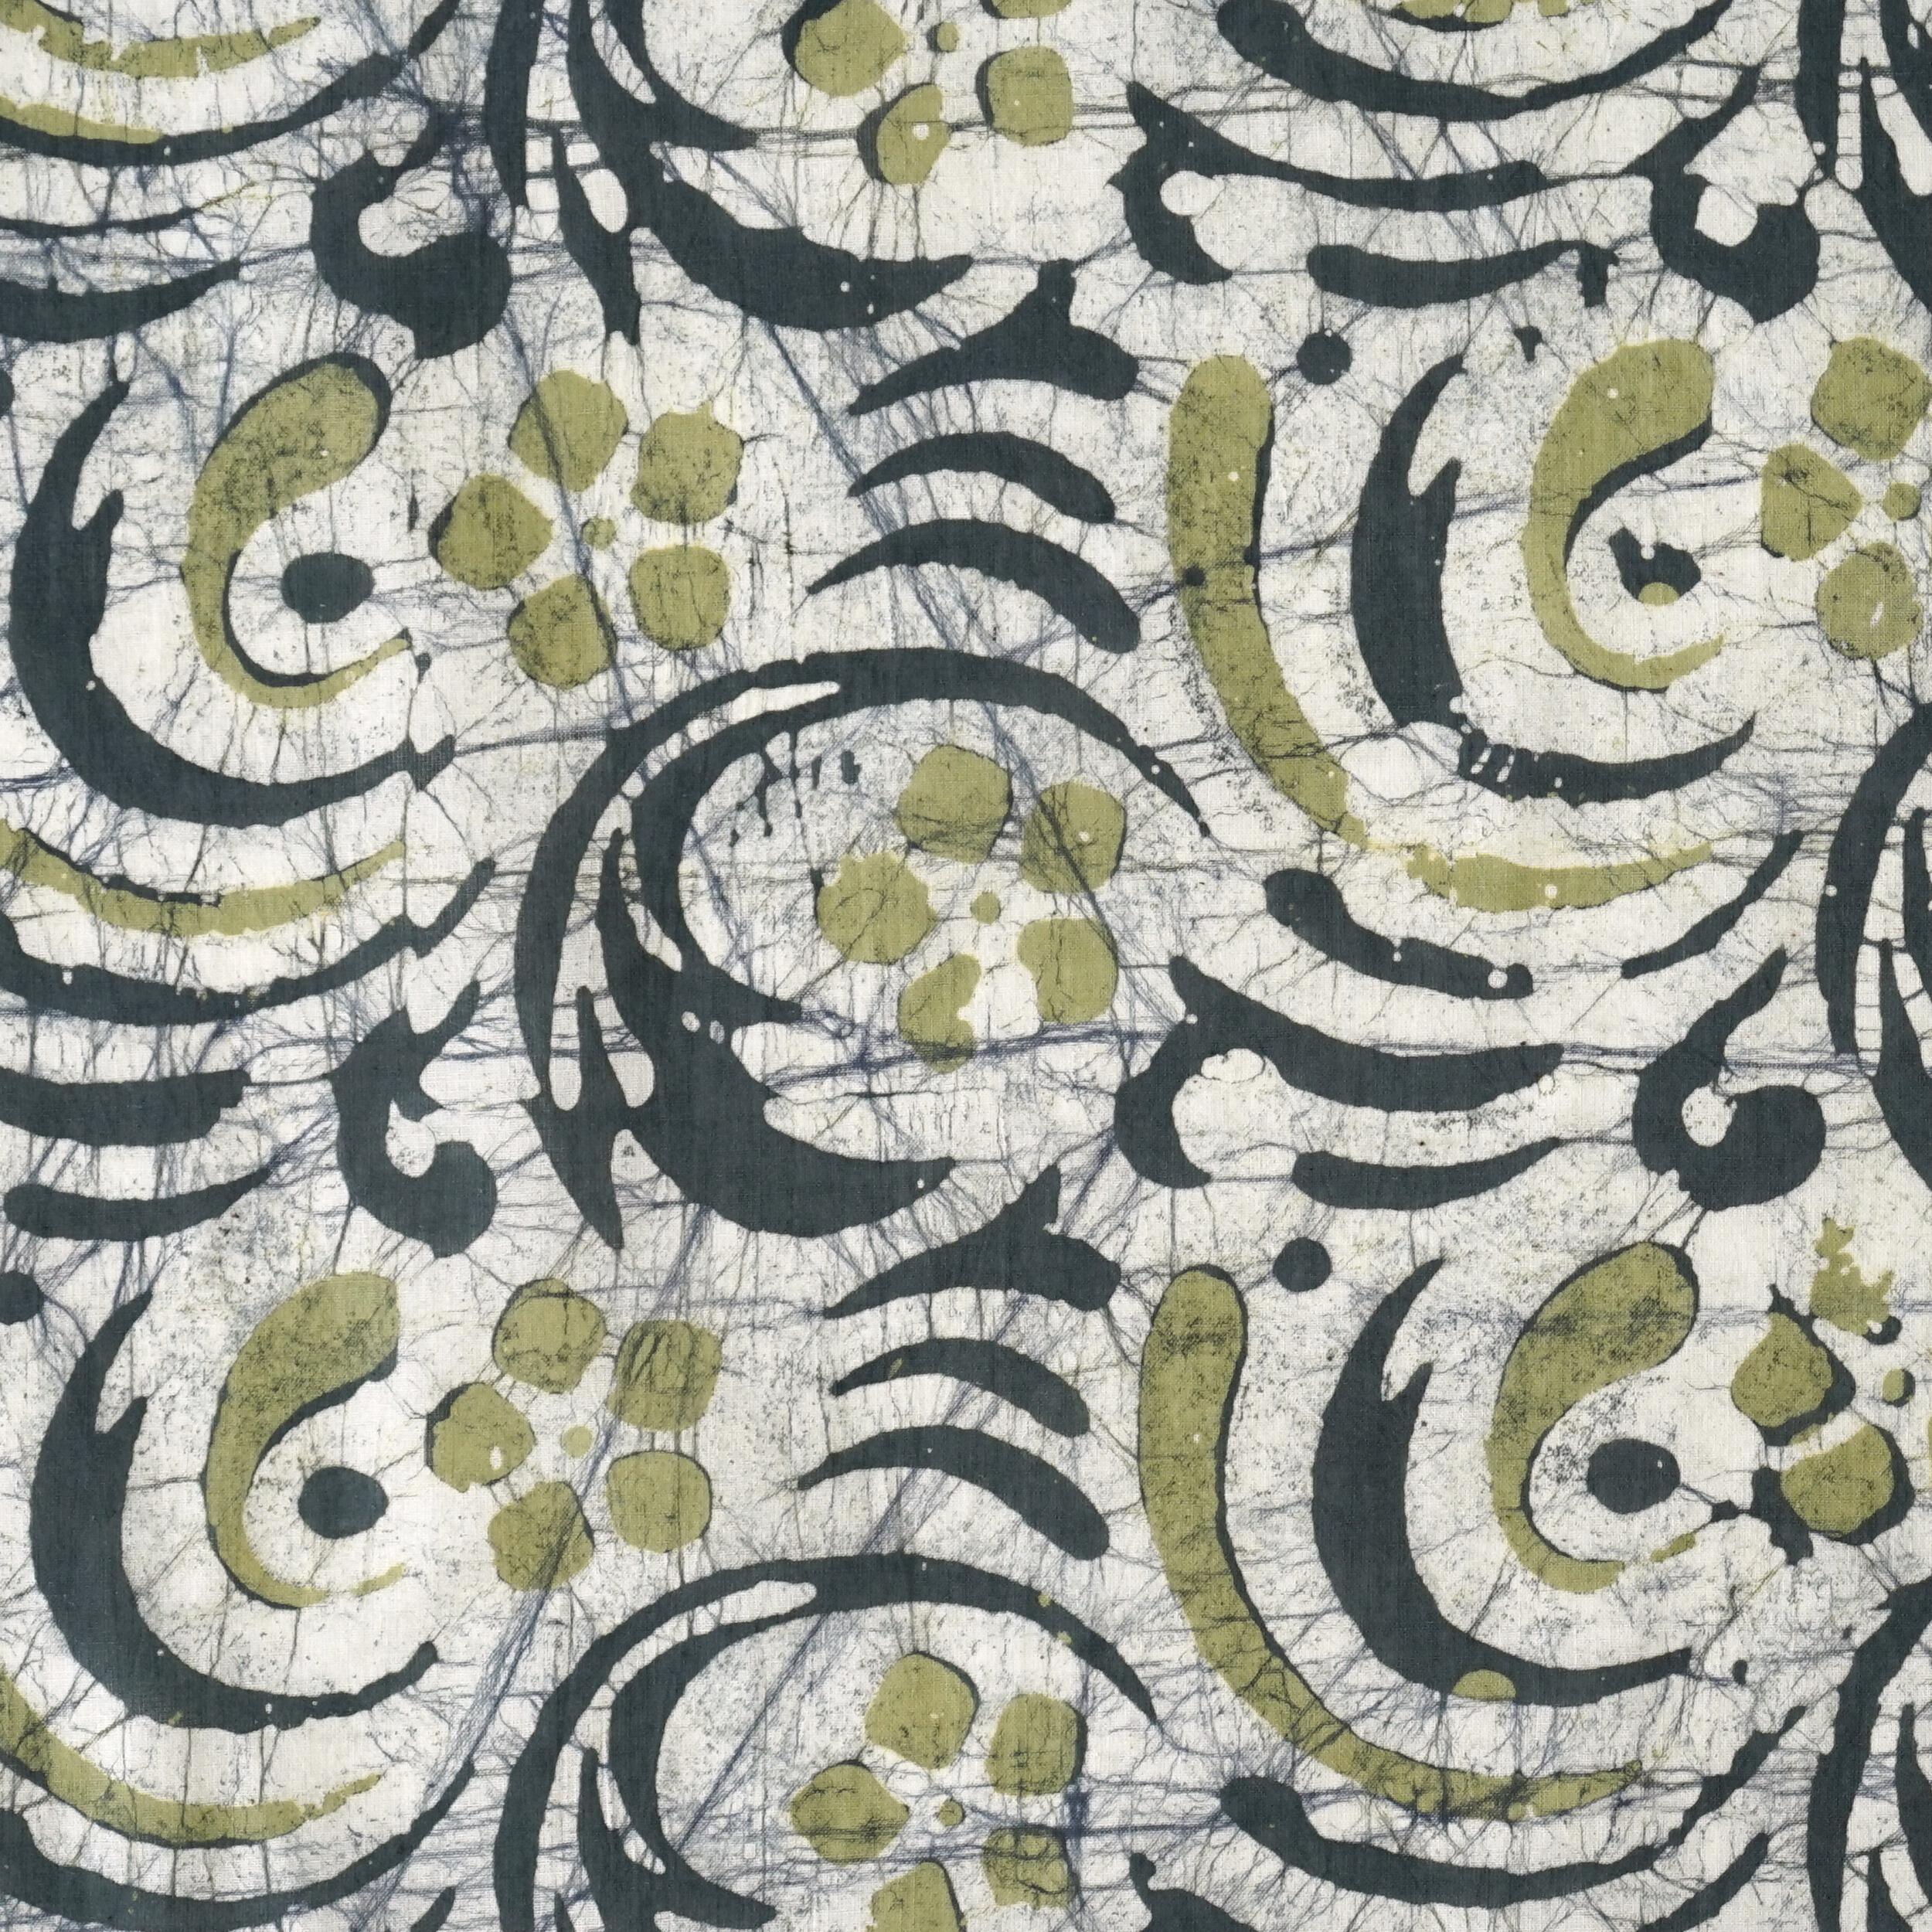 100% Block-Printed Batik Cotton Fabric From India - River Eddy Motif - Flat